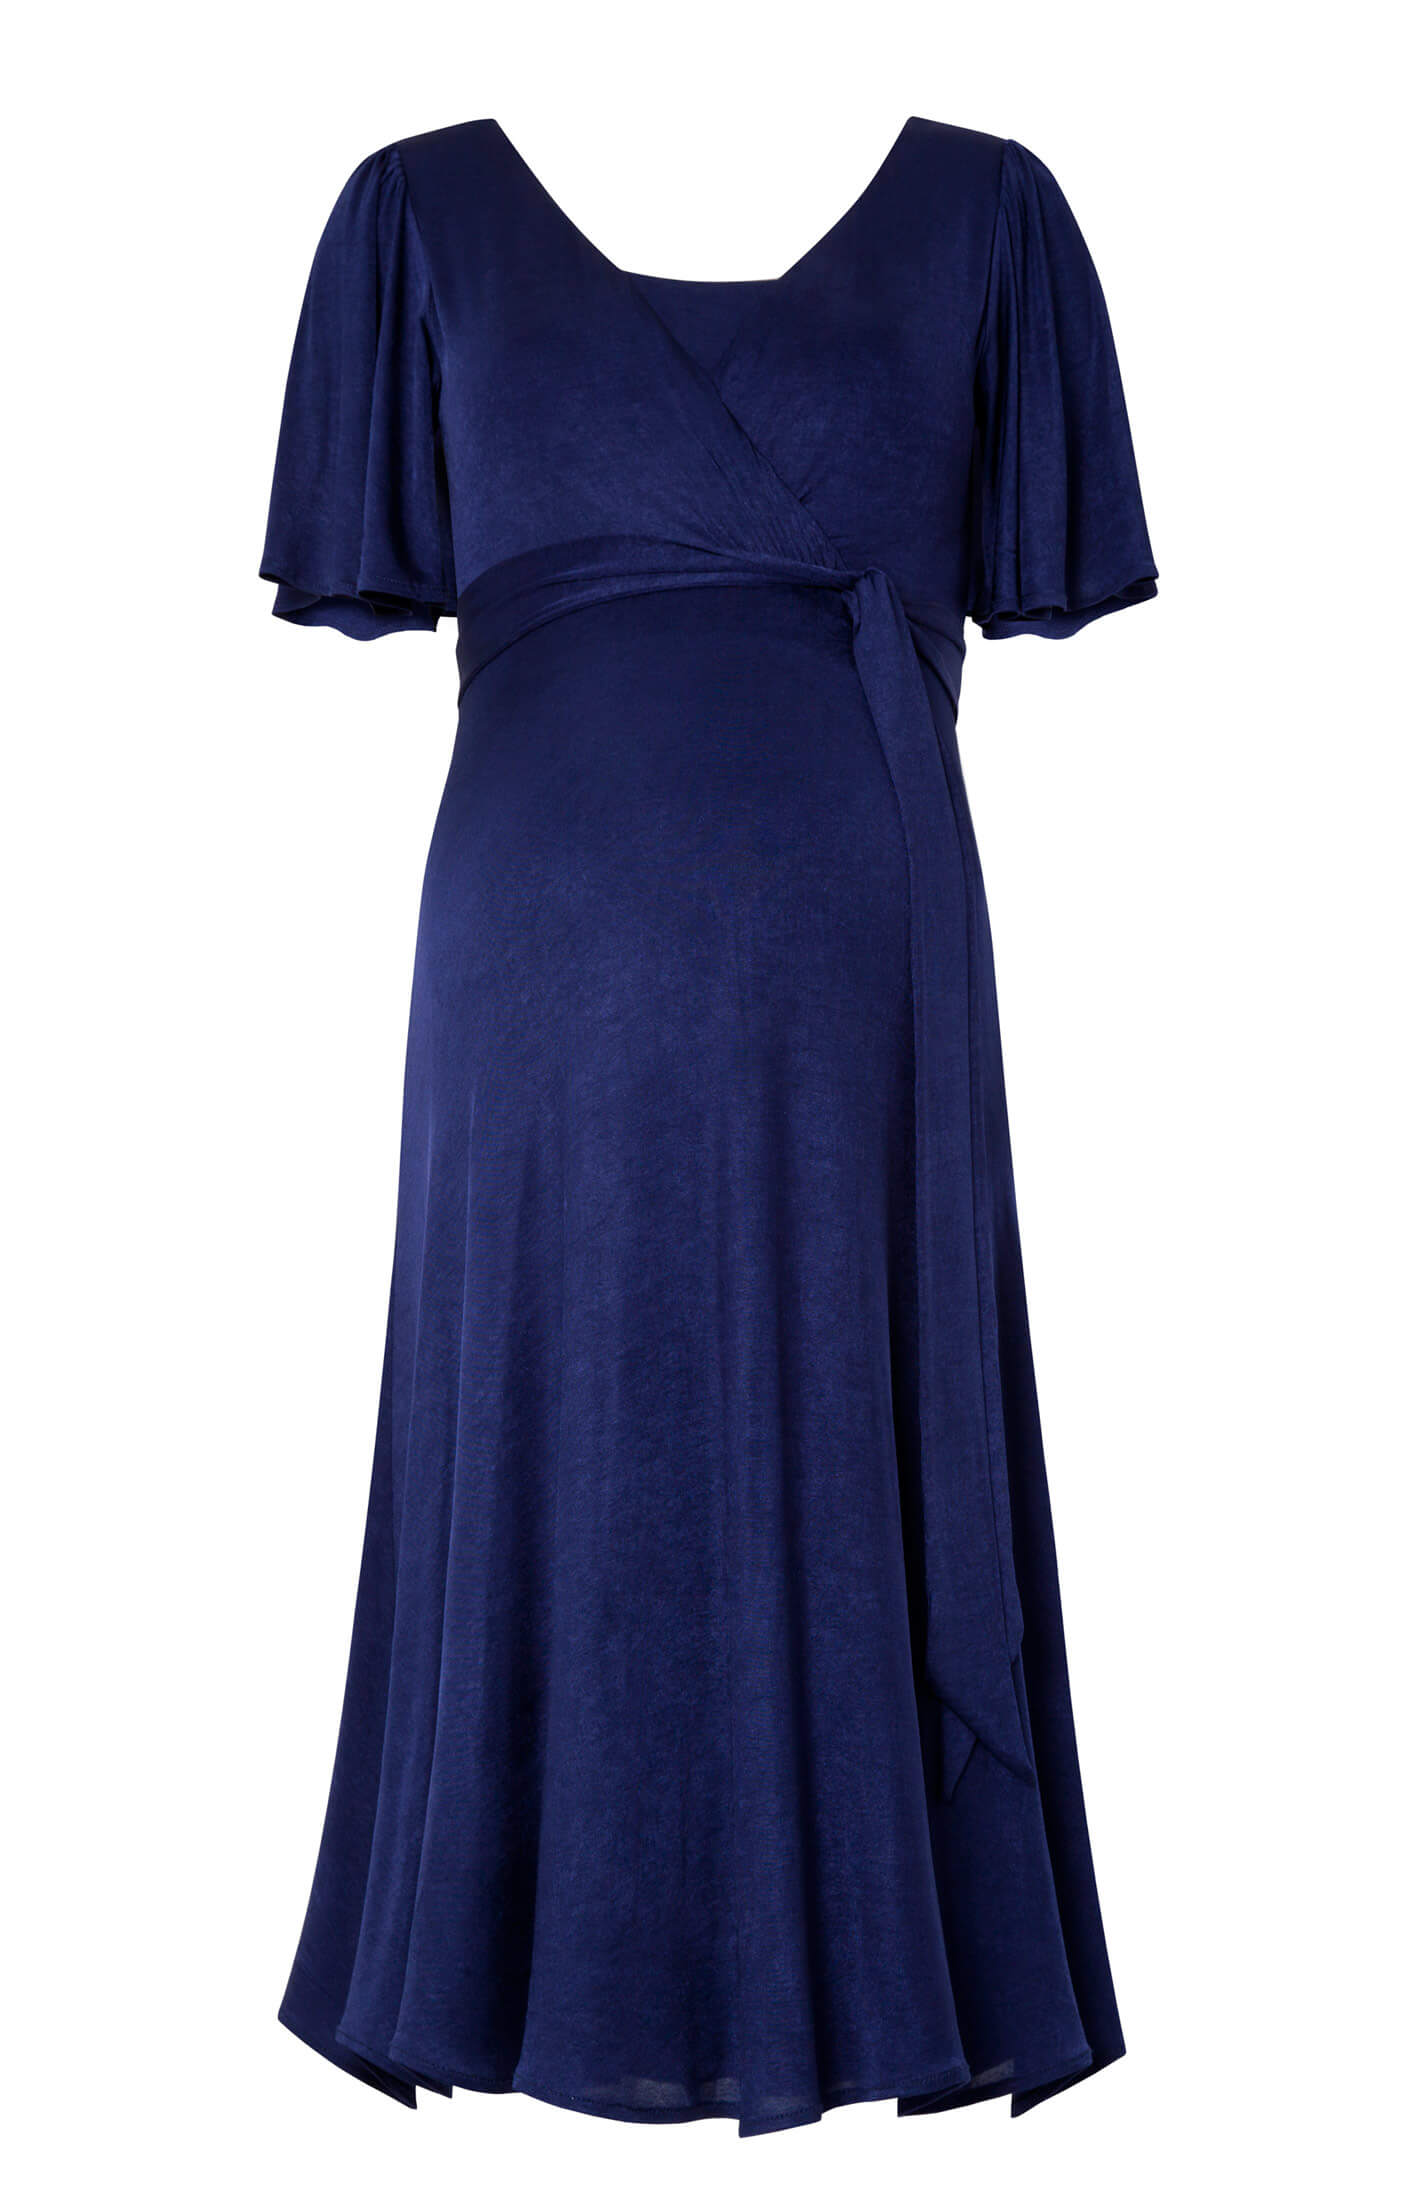 Alicia Nursing Dress Eclipse Blue - Maternity Wedding Dresses, Evening ...